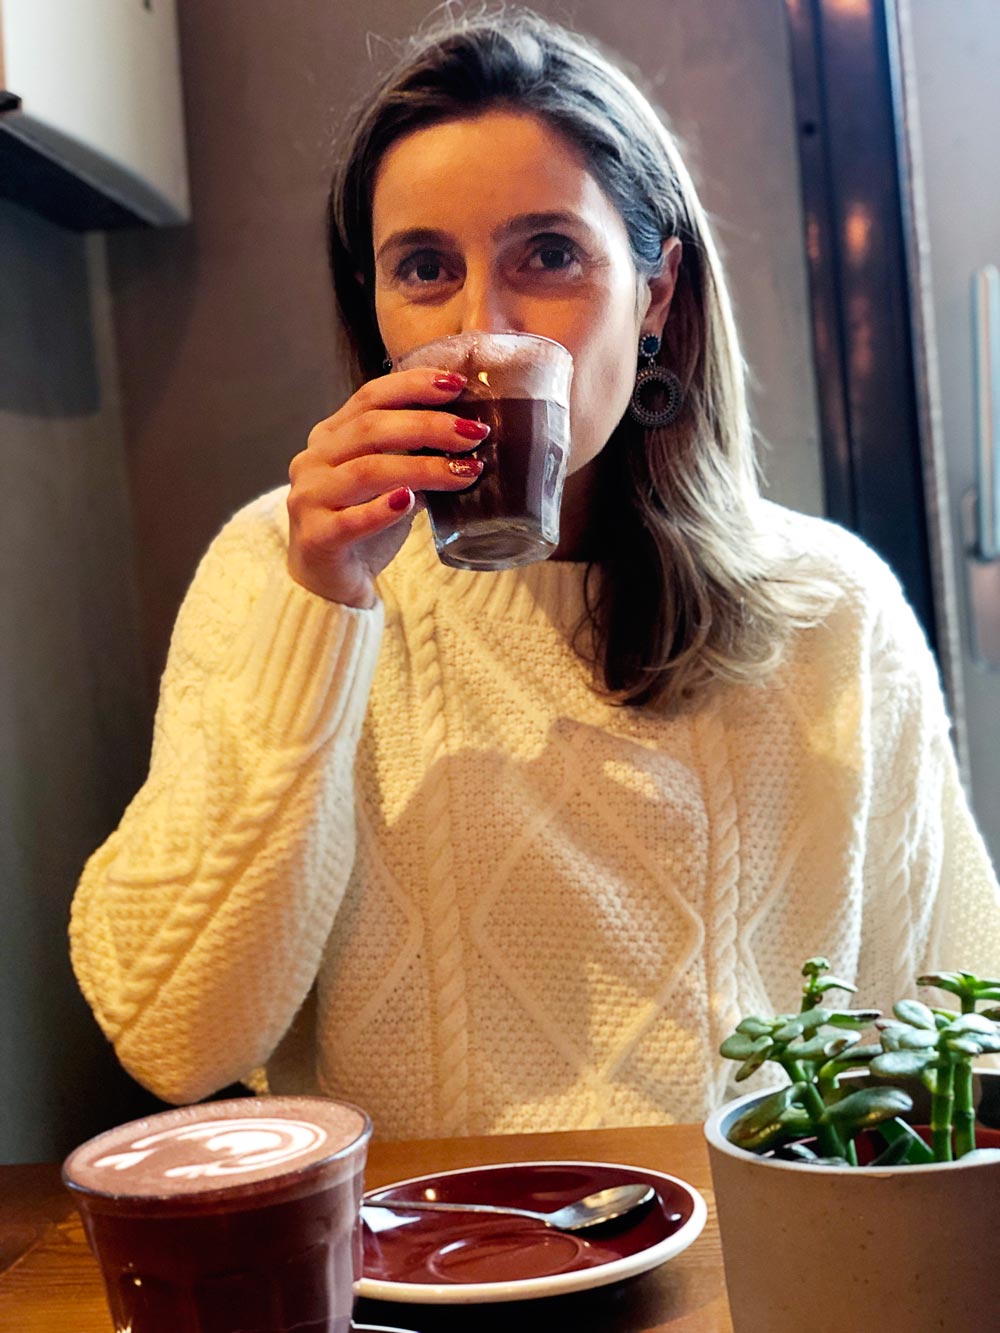 Sara drinking hot chocolate at Zenith, in Porto.